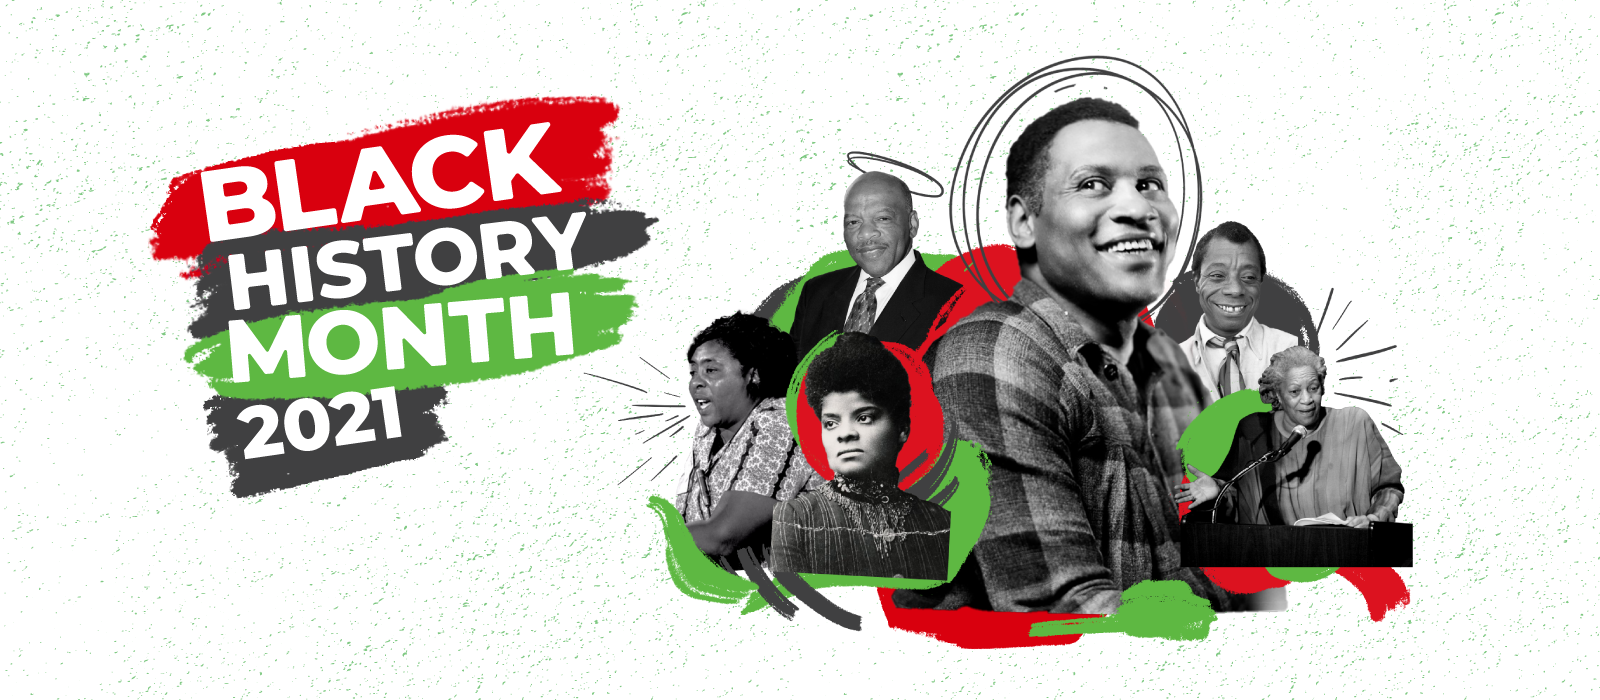 Celebrating Black History Month 2021